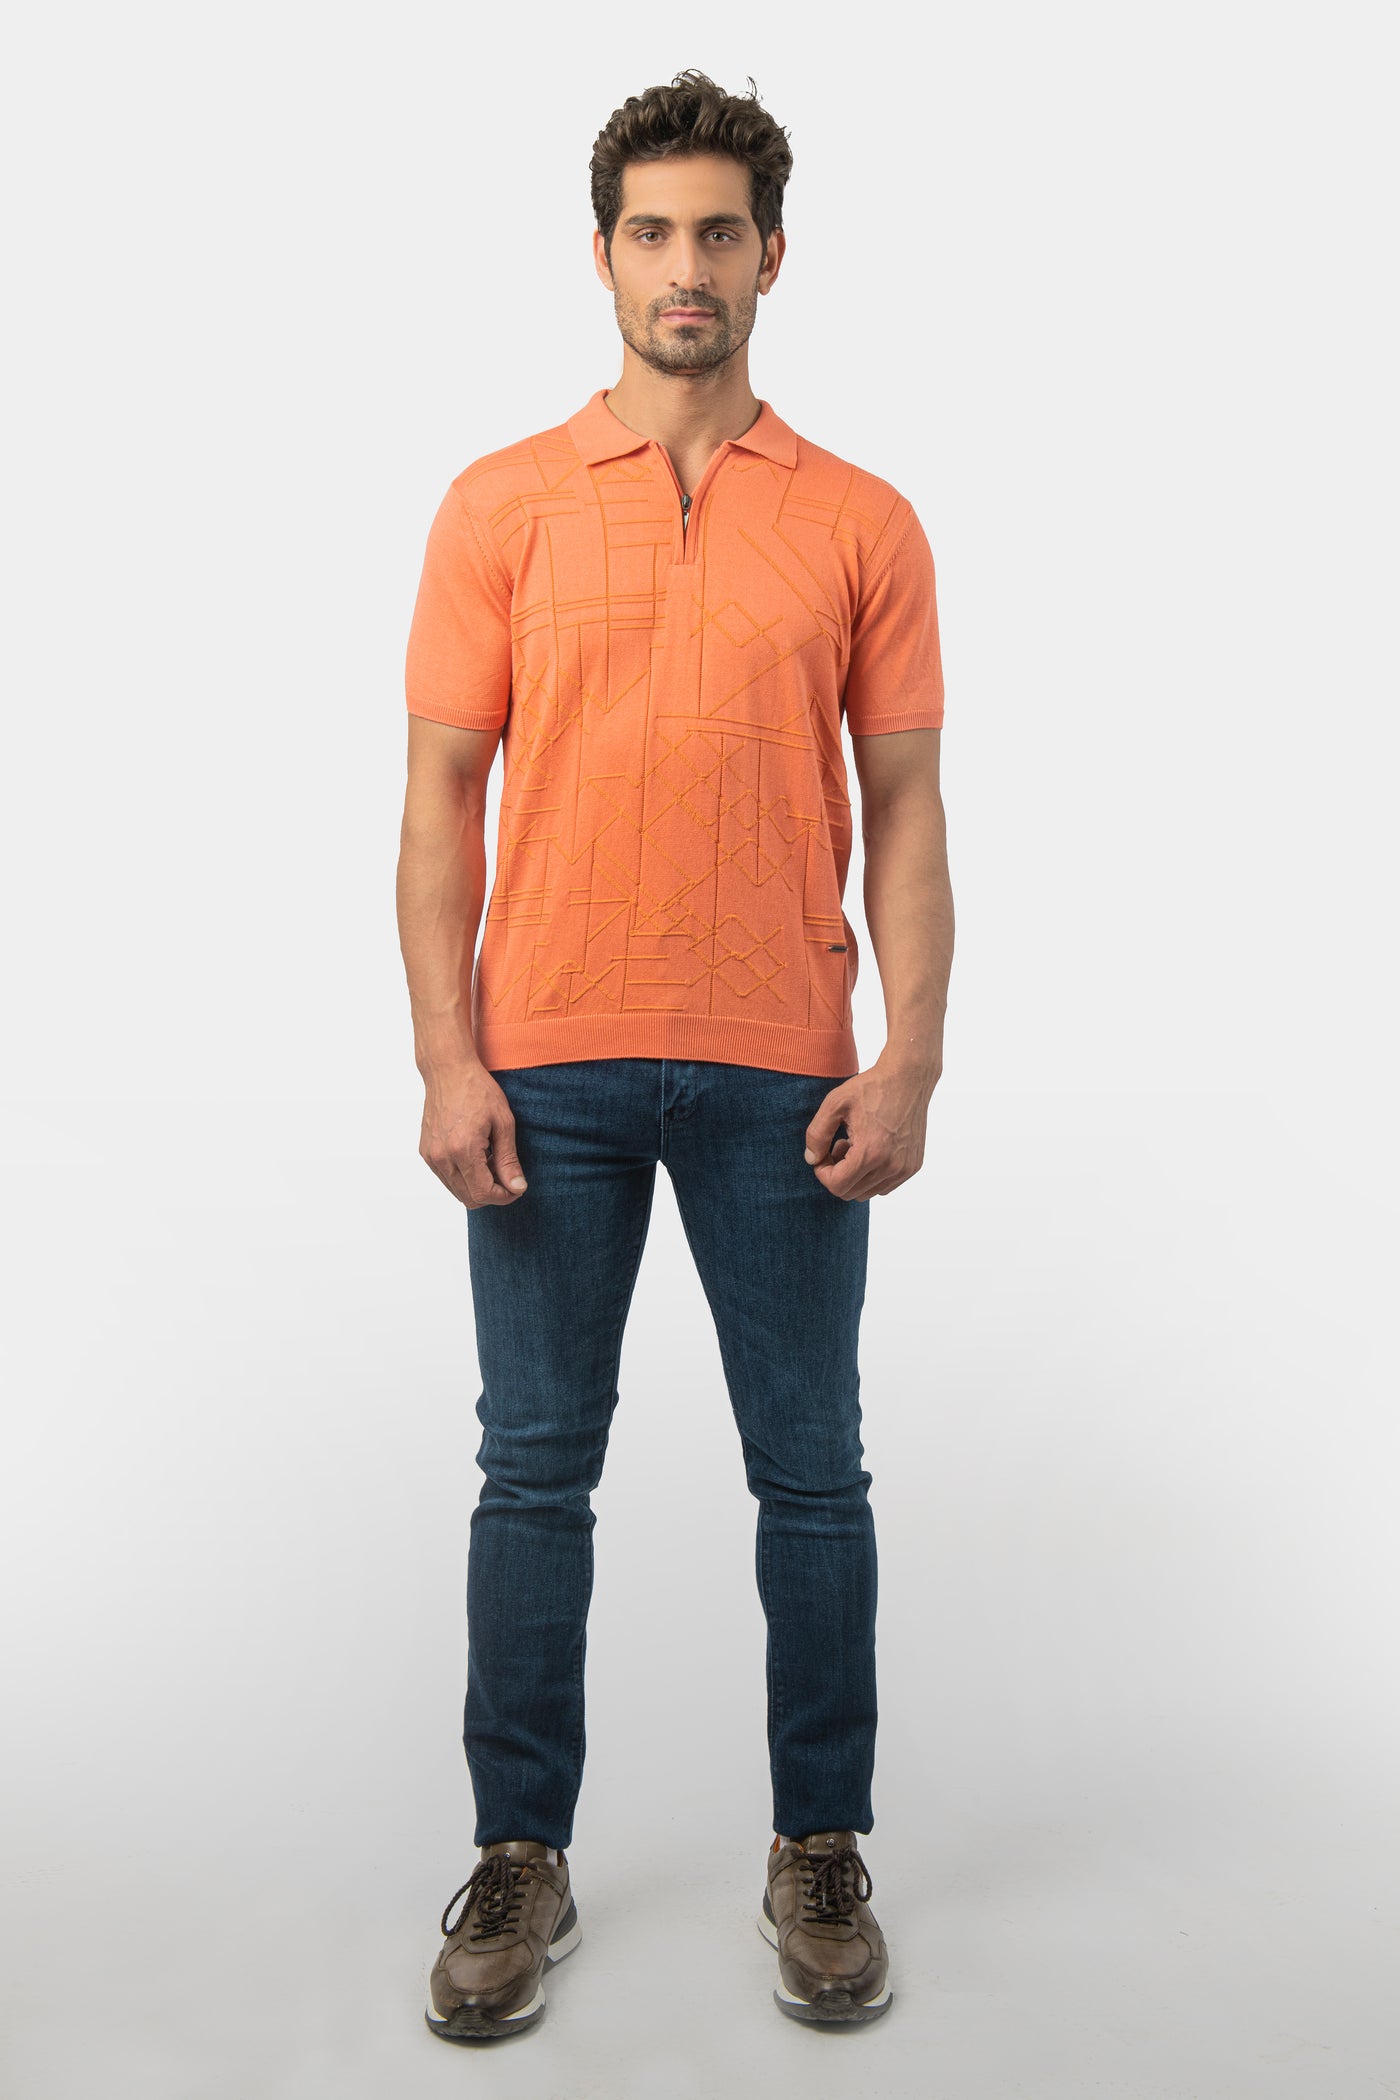 Jacquard Knitted Orange Cotton Polo